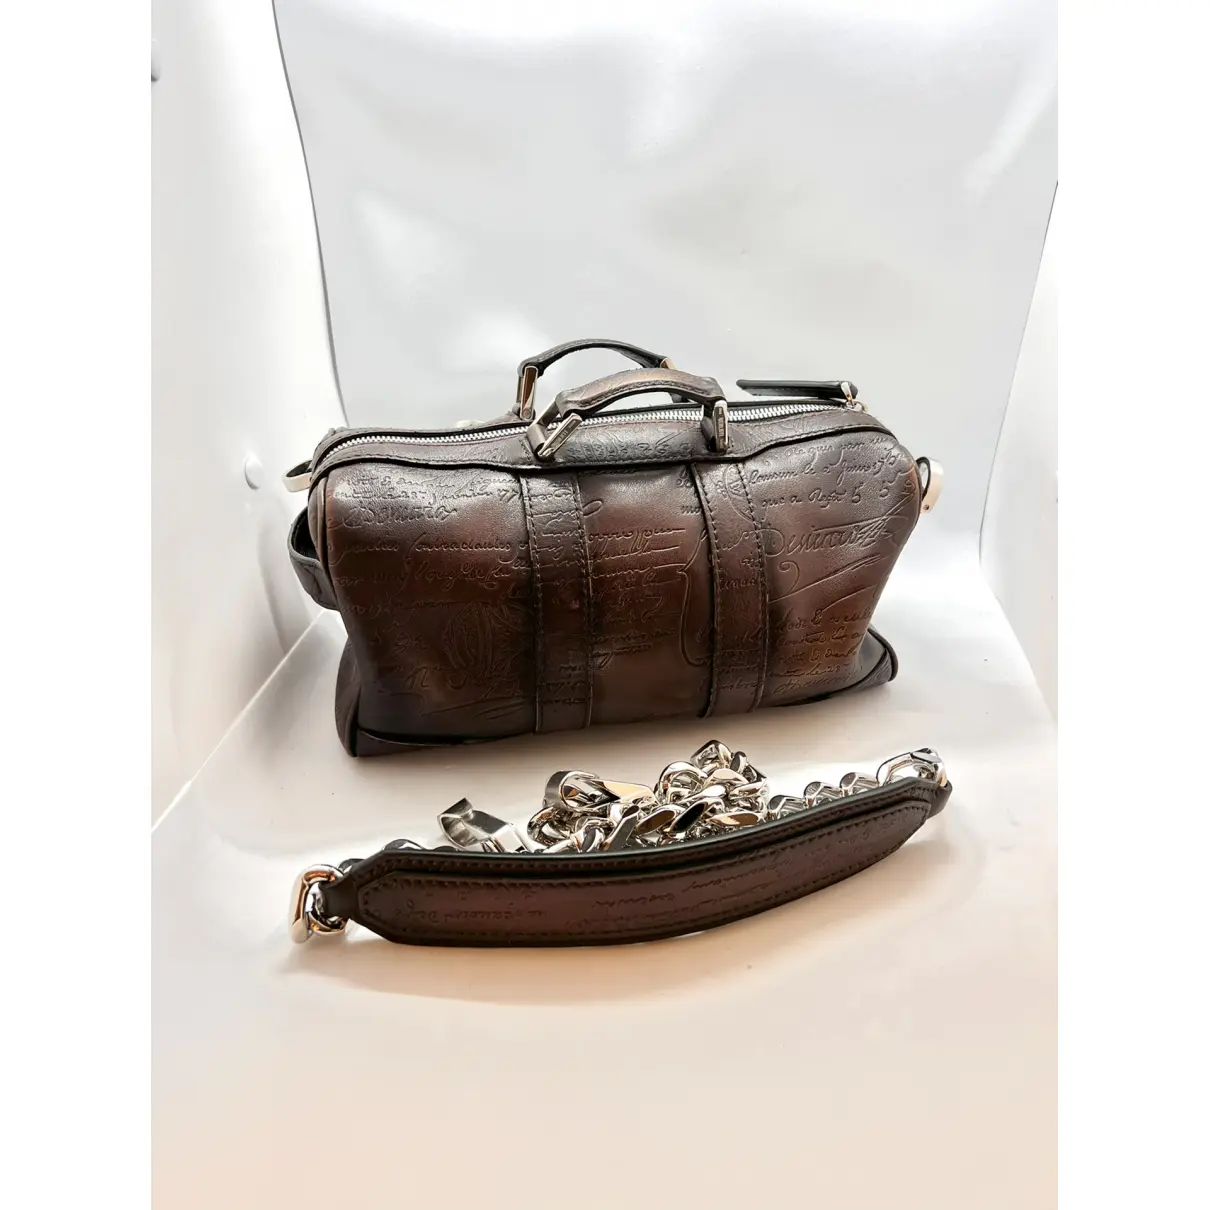 Buy Berluti Leather handbag online